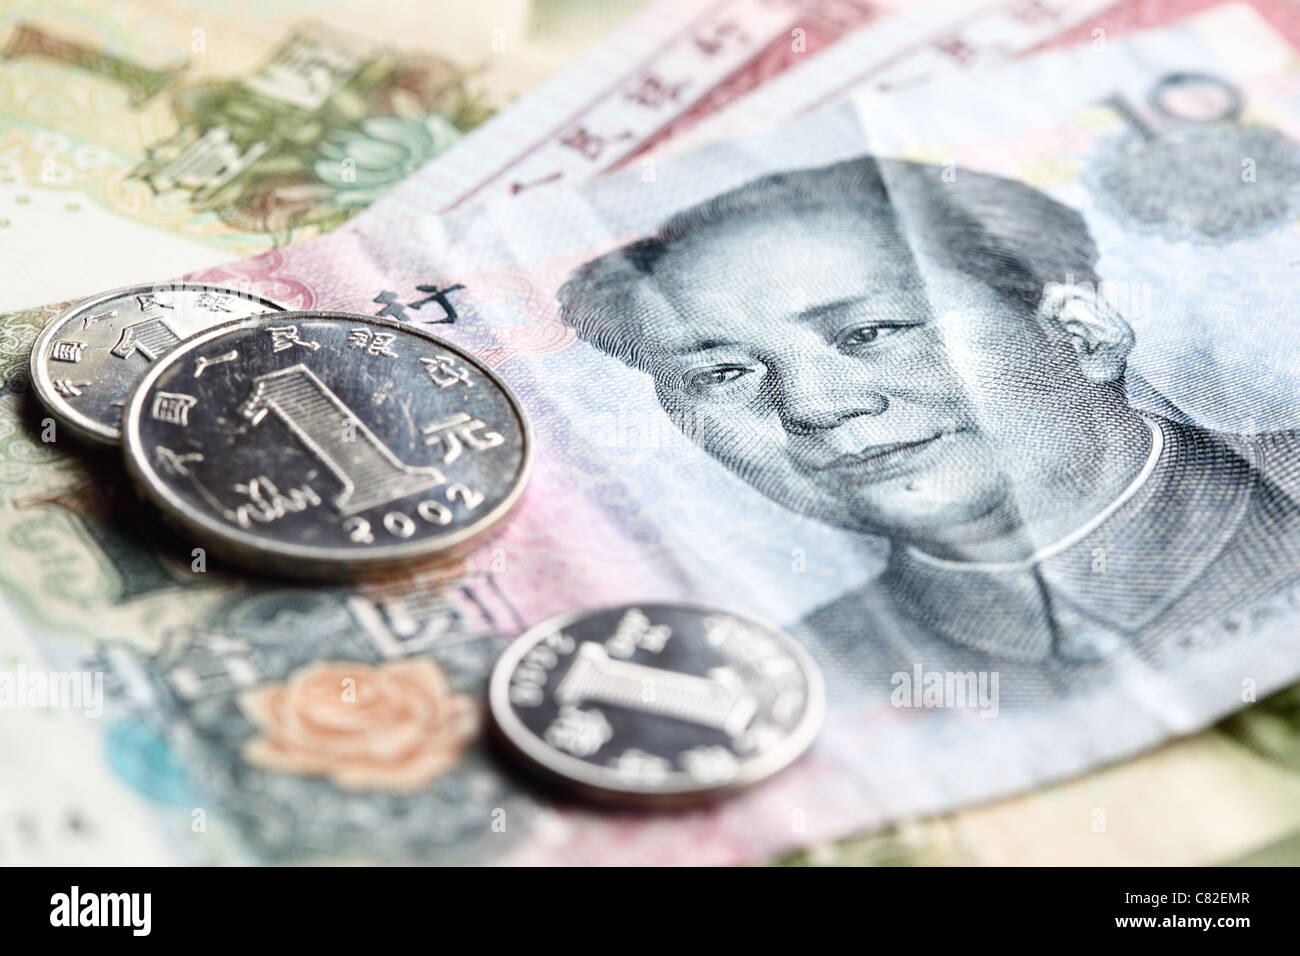 Chinese yuan renminbi banknotes and coins close-up Stock Photo